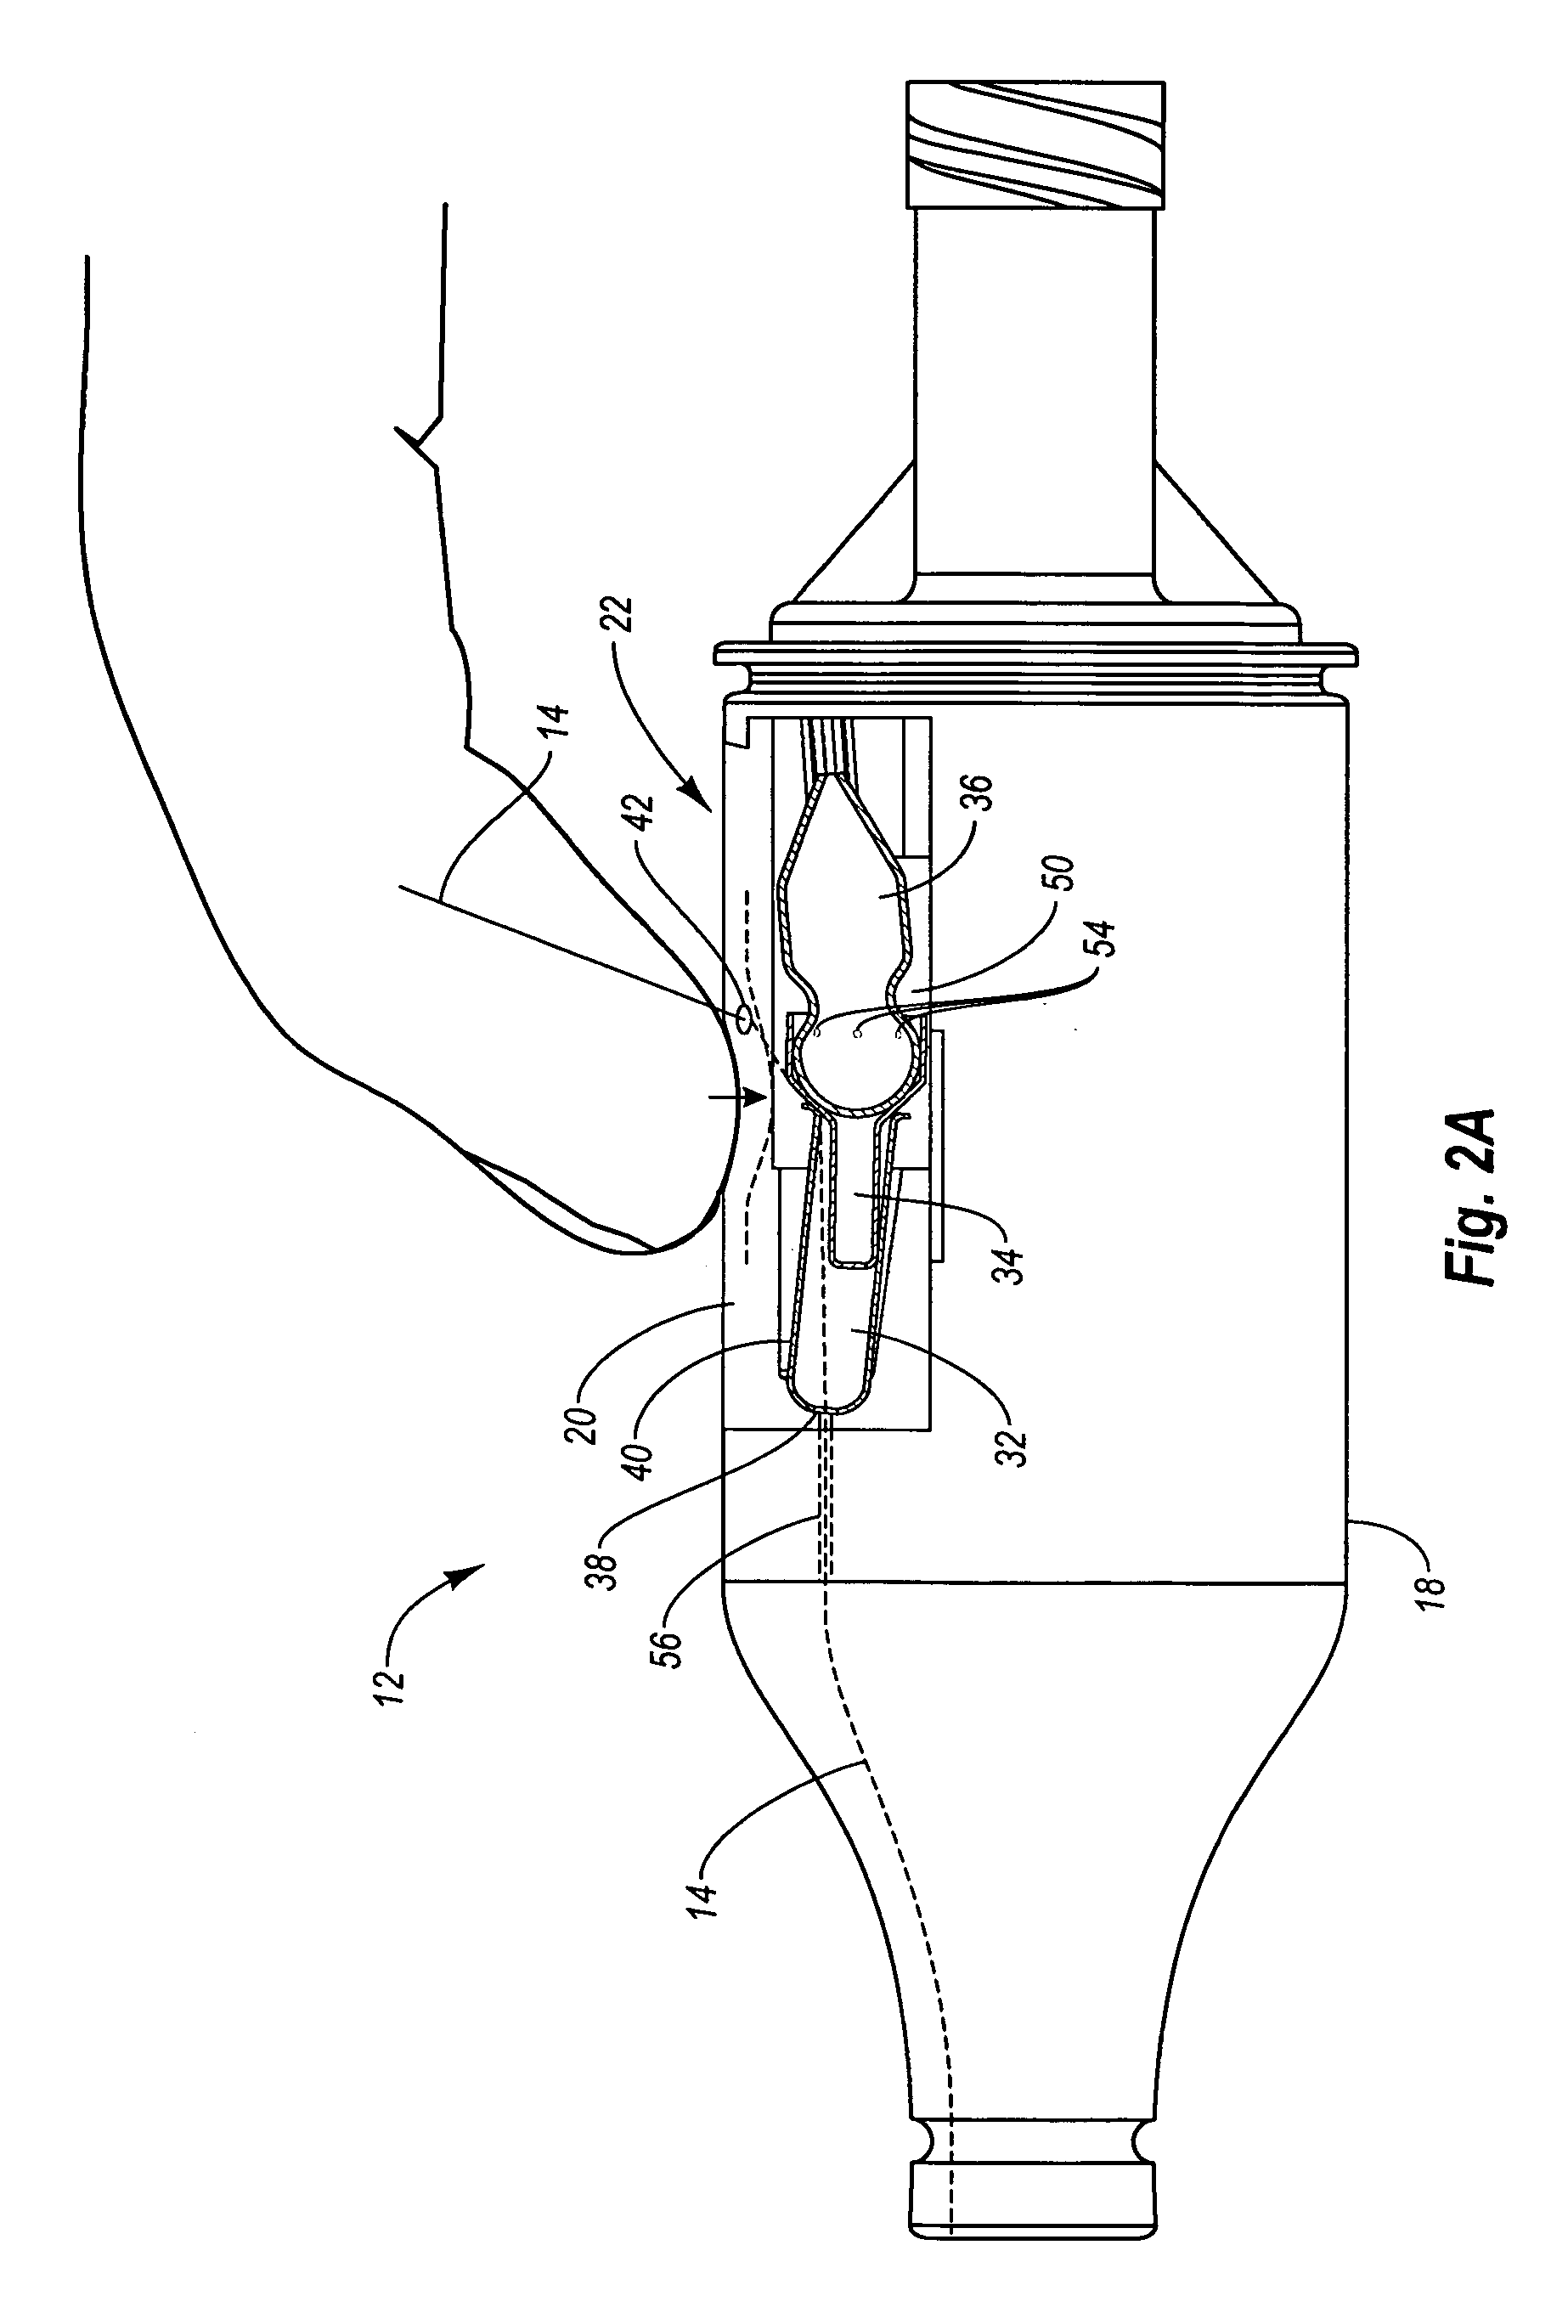 Drainage catheter with locking hub